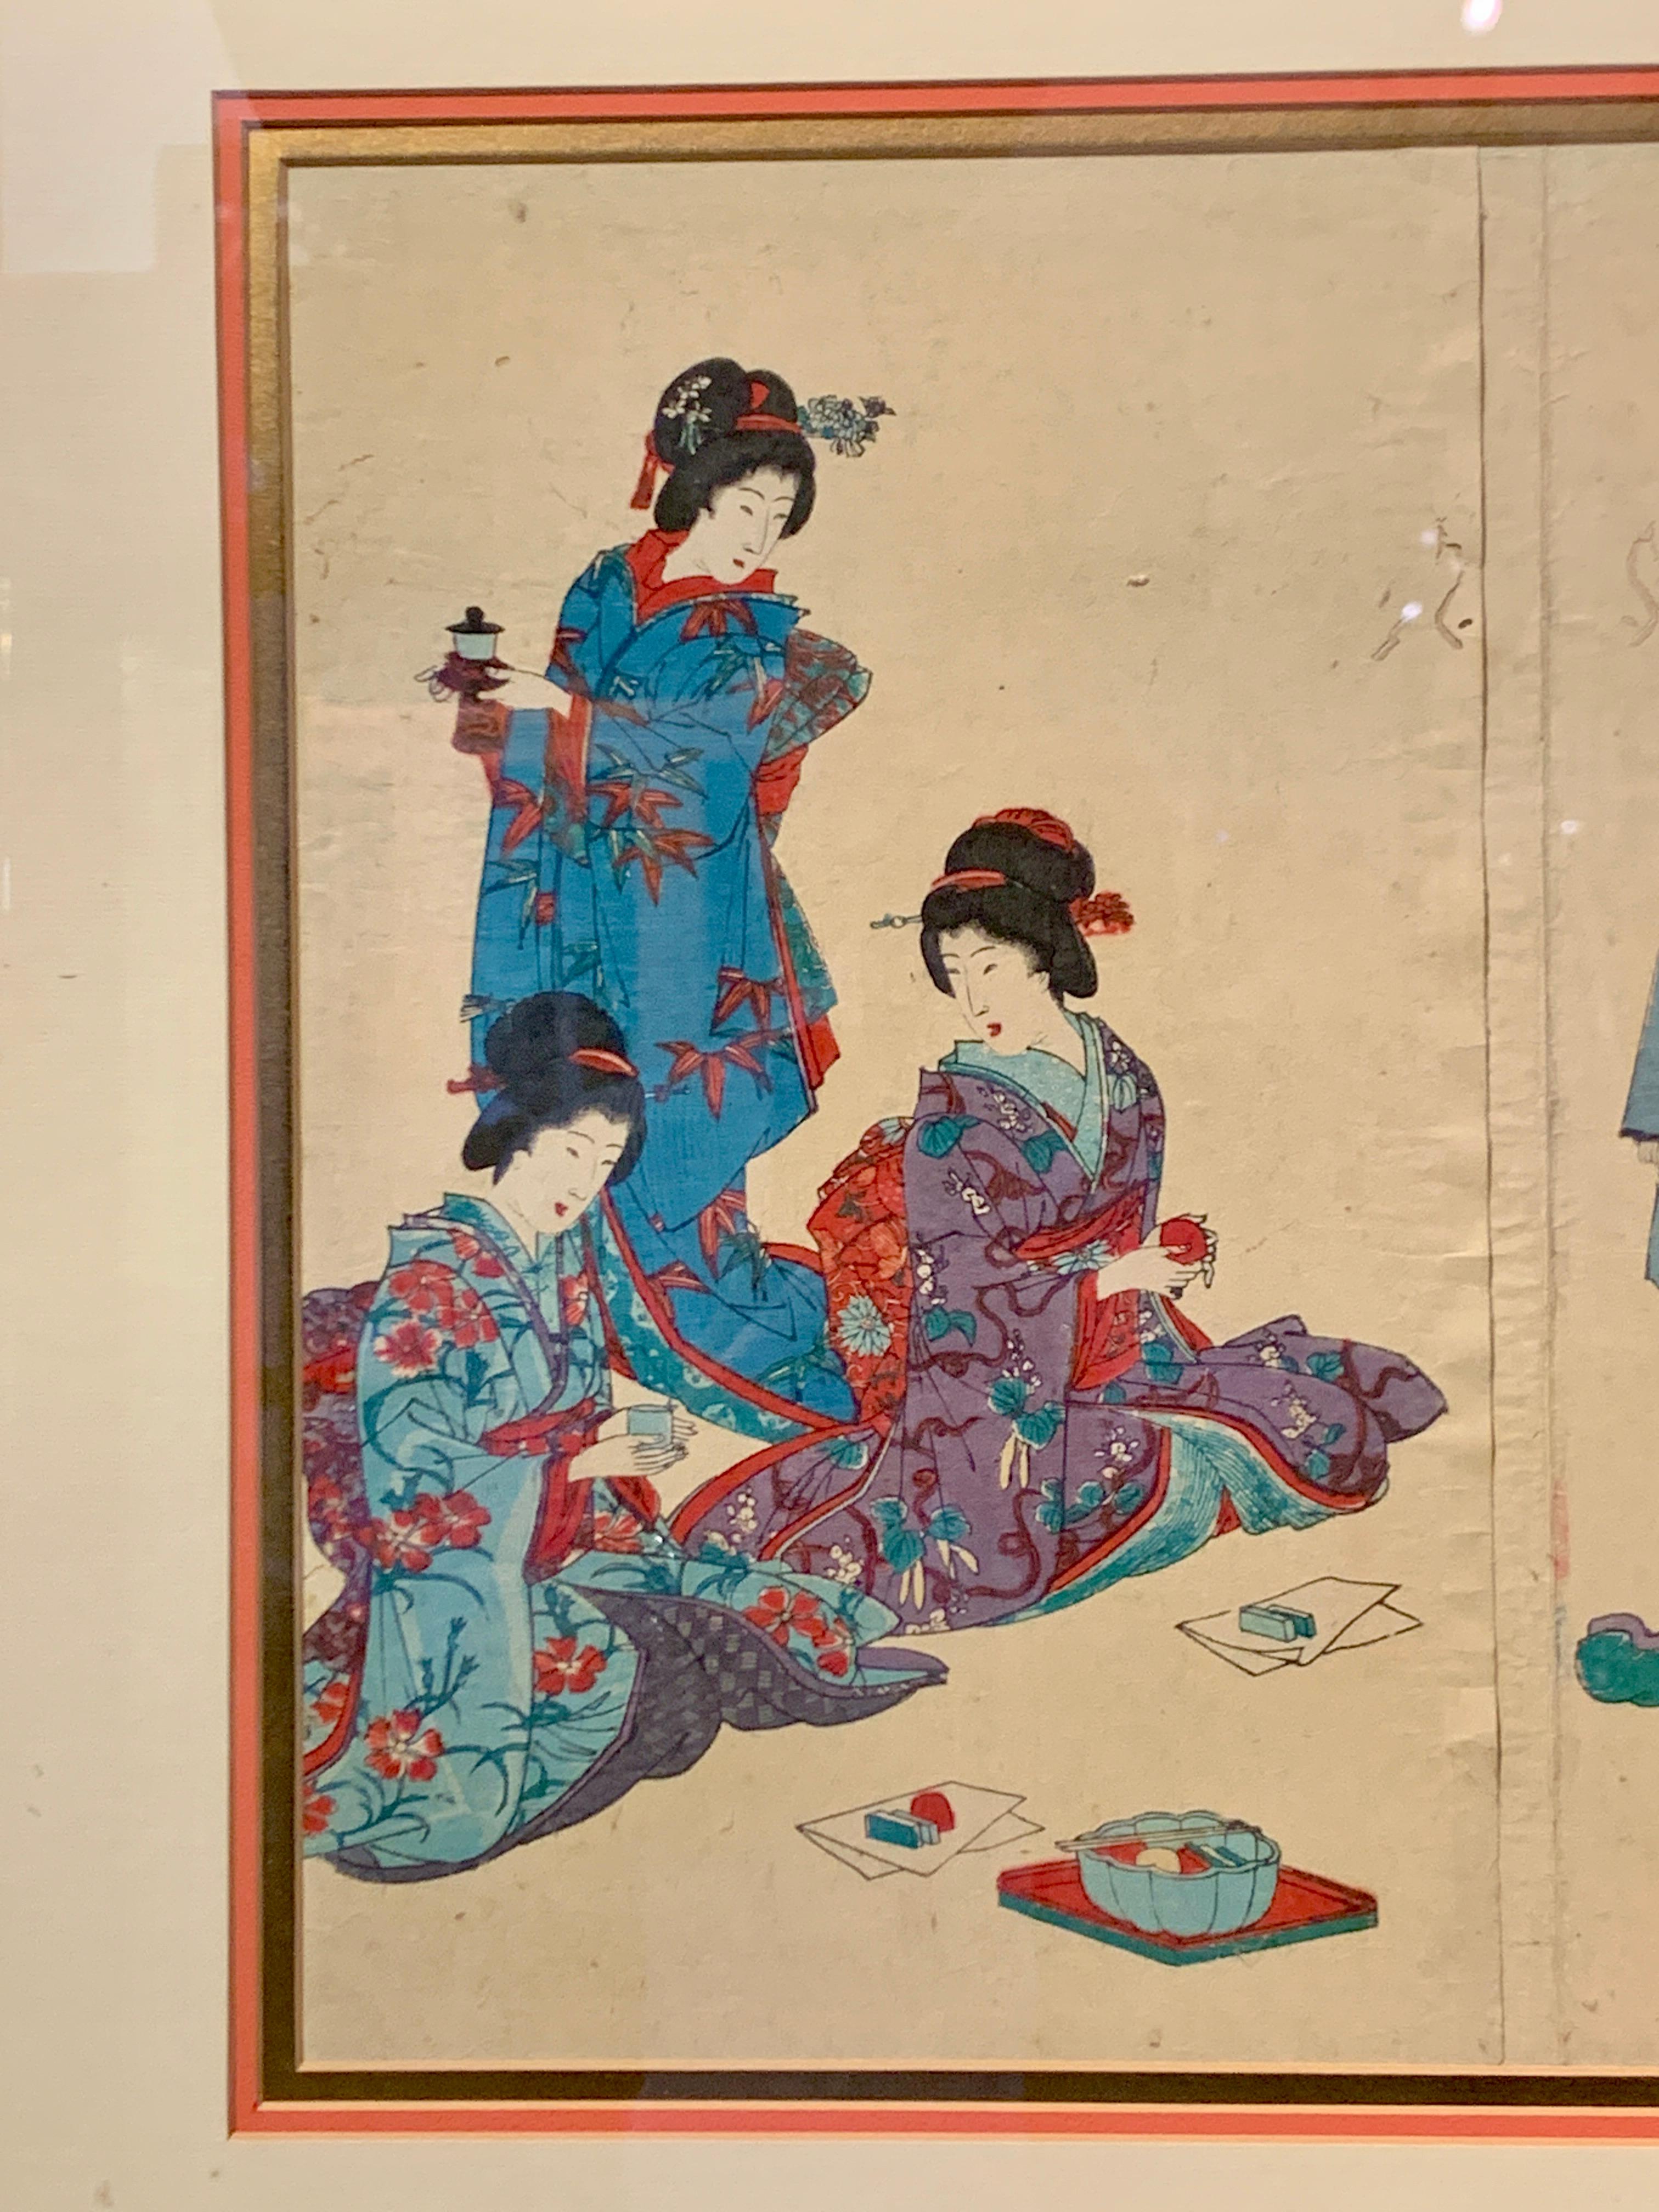 An elegant and delightful Japanese woodblock print triptych (sammaitsuzuki) from the series 